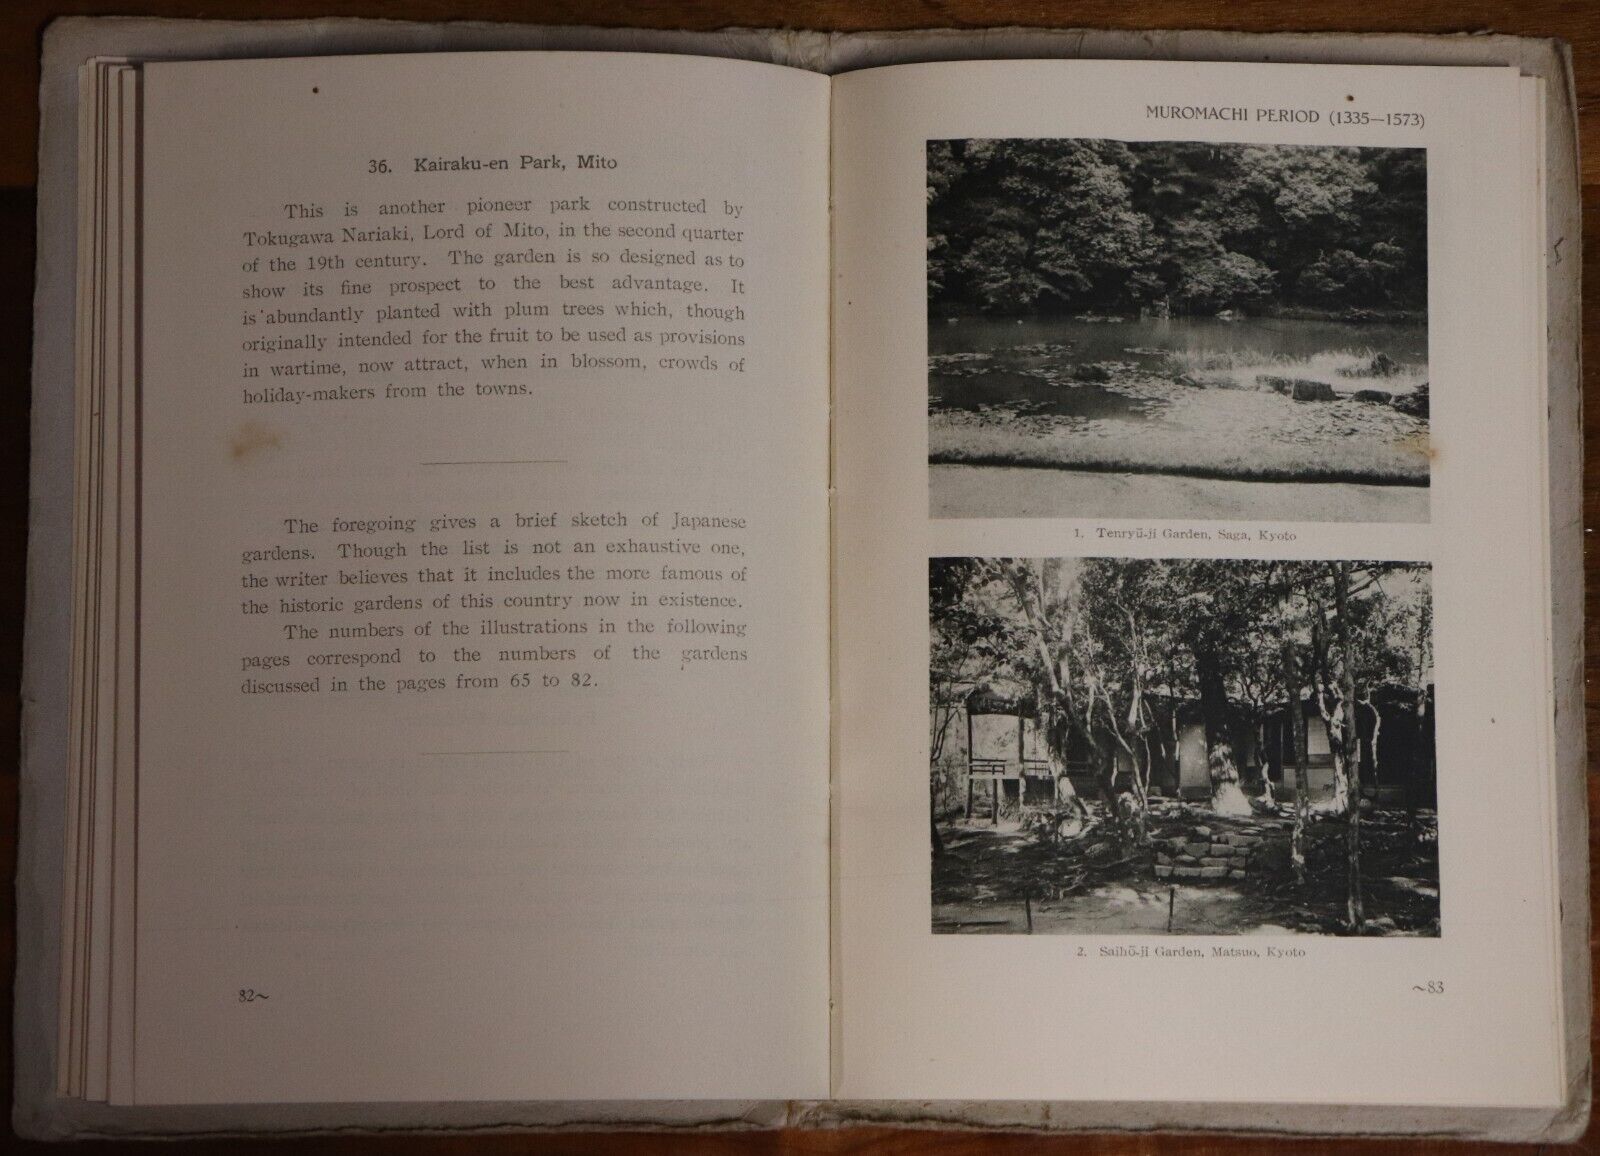 Japanese Gardens by Prof. Tatsui - 1936 - Antique Garden Architecture Book